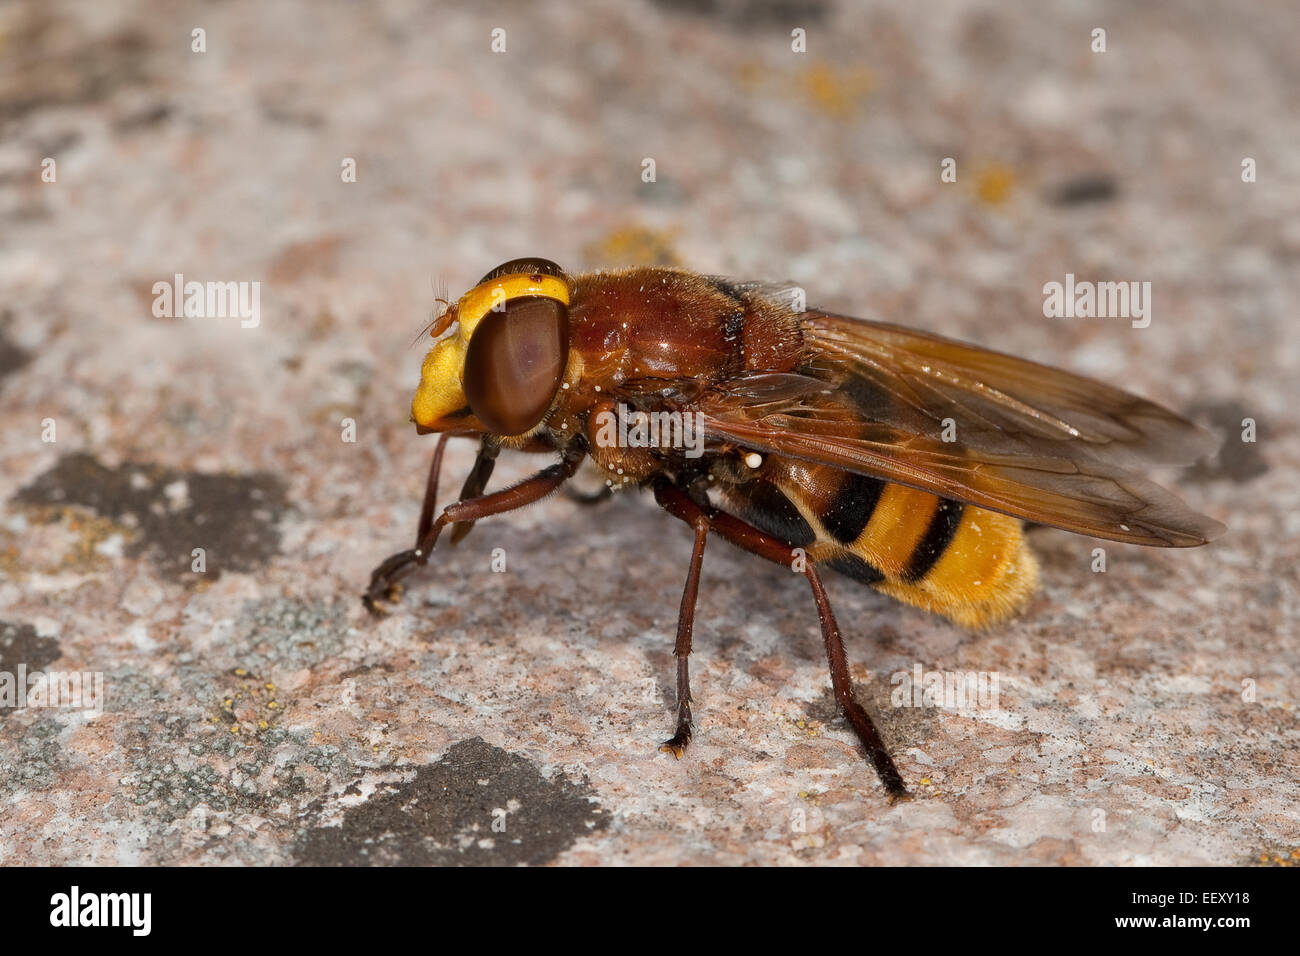 Hornet mimare hoverfly, mimica, camouflage Große Waldschwebfliege, Hornissen-Schwebfliege, Volucella zonaria, Tarnung, Mimikry Foto Stock